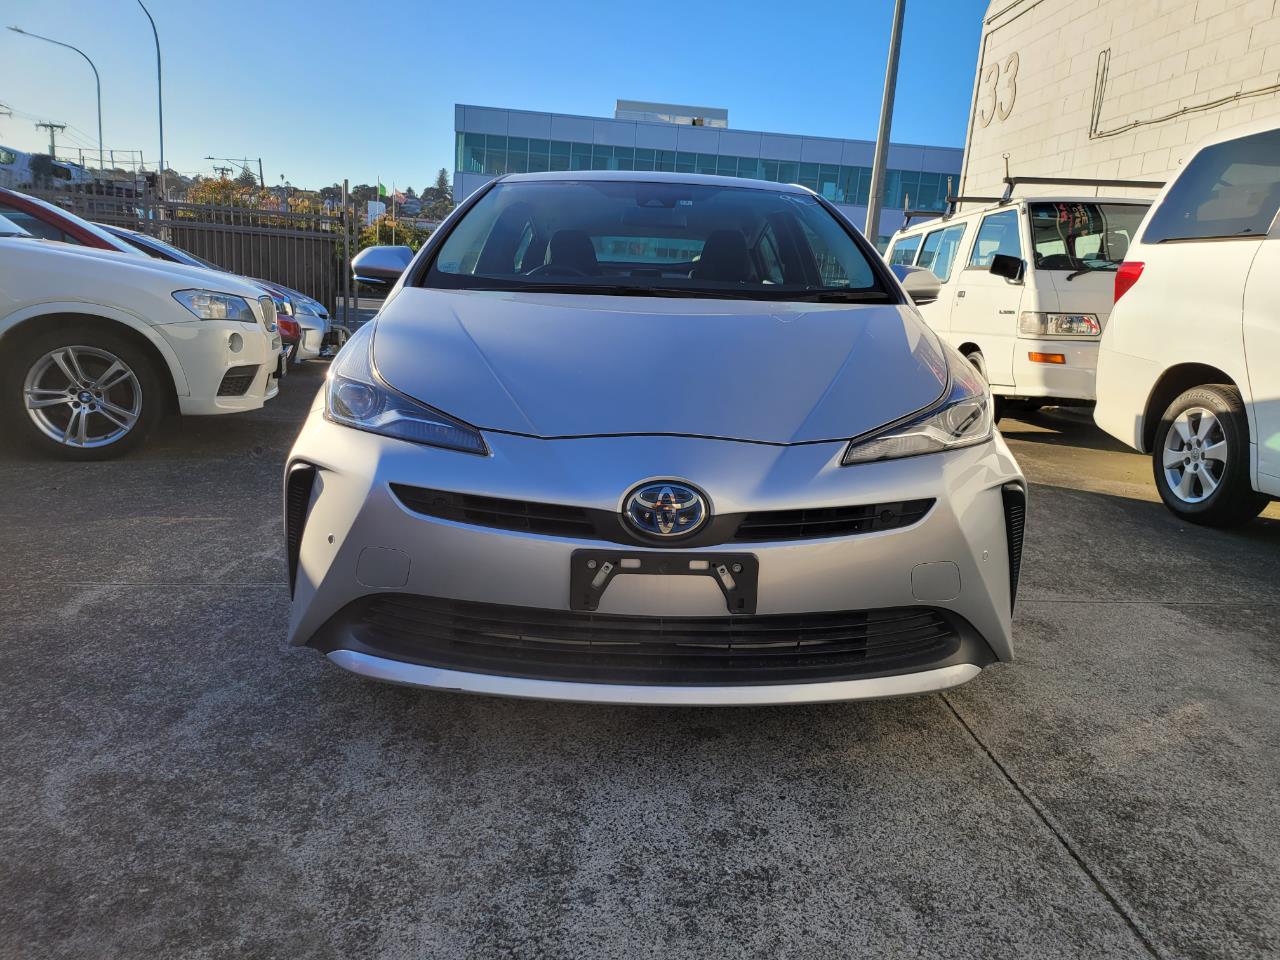 2019 Toyota Prius image 1